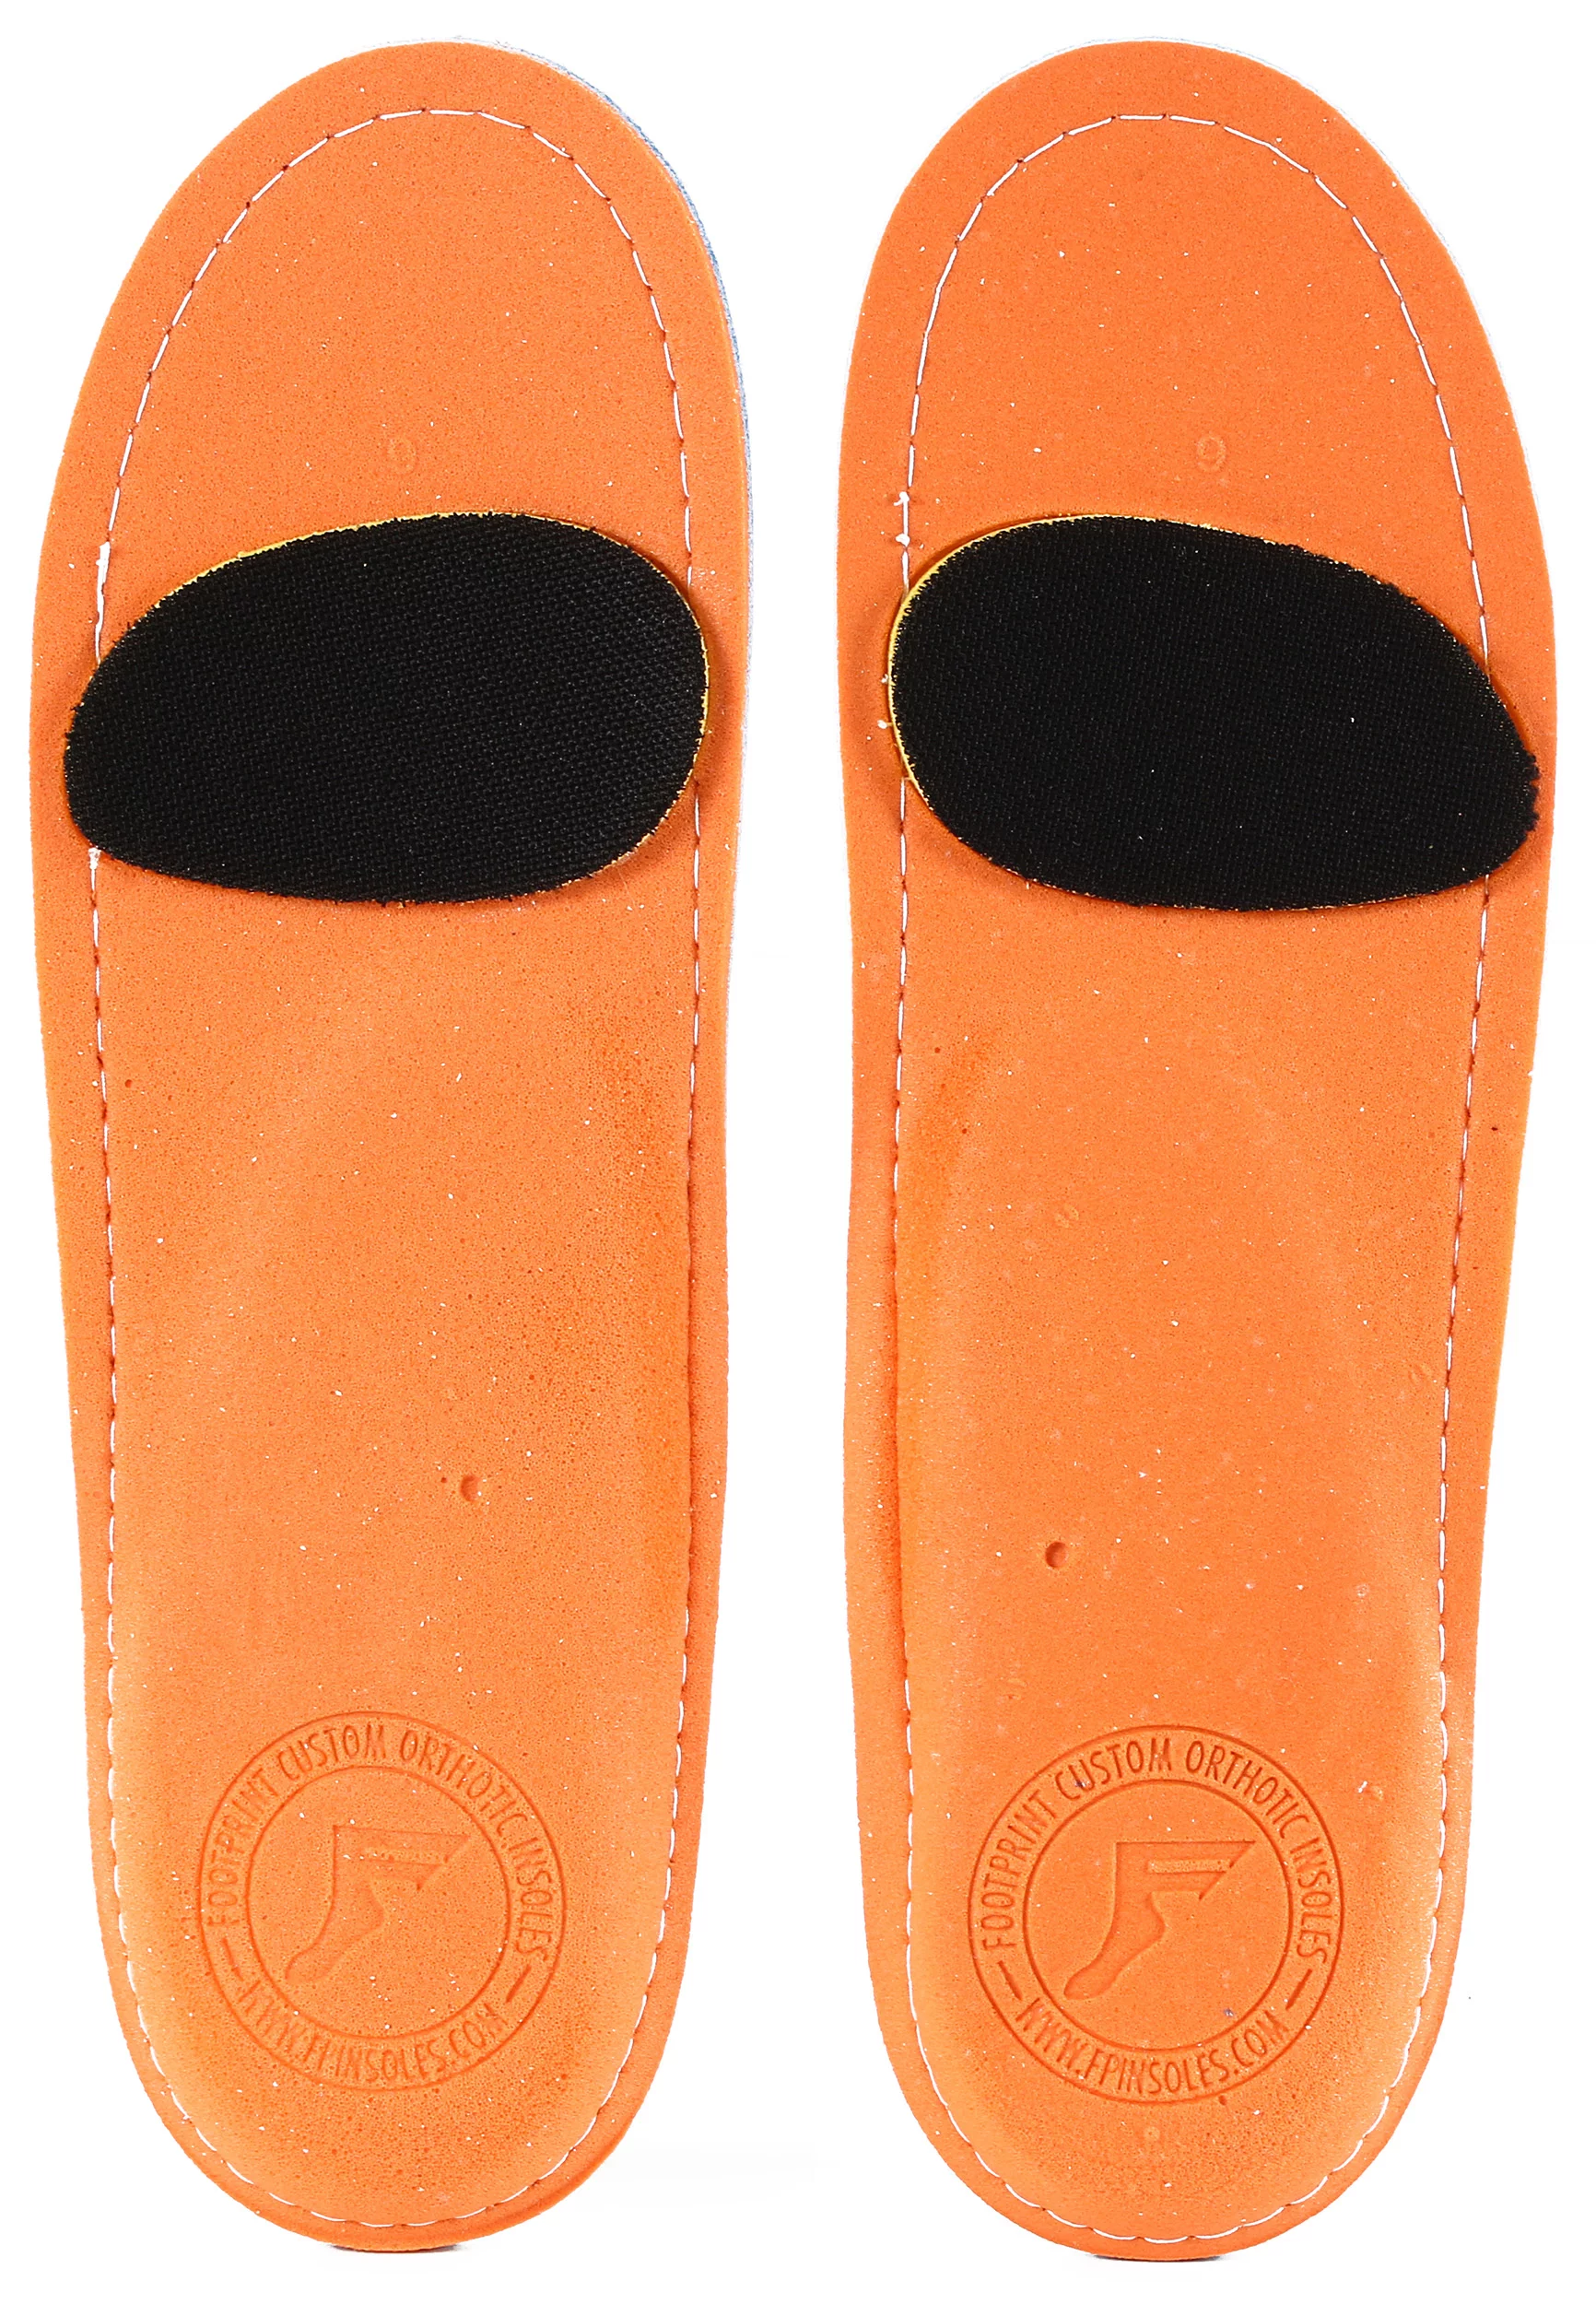 Footprint Orthotic Insoles Kingfoam Orange Camo Custom Orthotics Insoles 